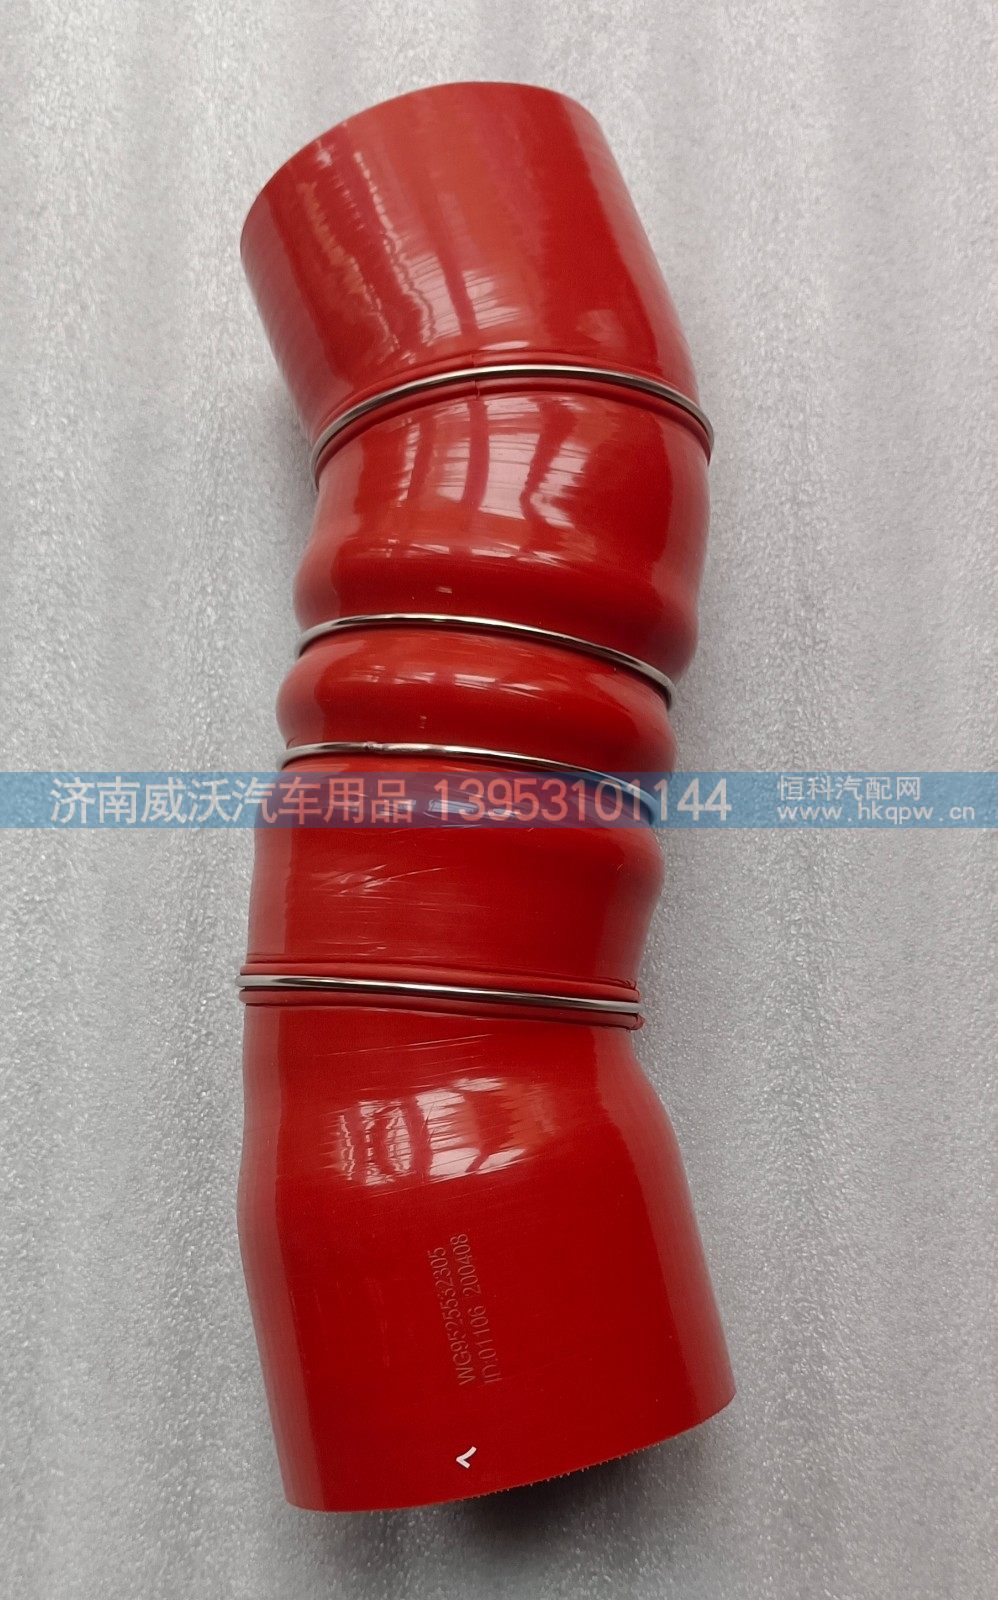 WG9525532305,中冷器出气胶管,济南市威沃汽车用品有限公司